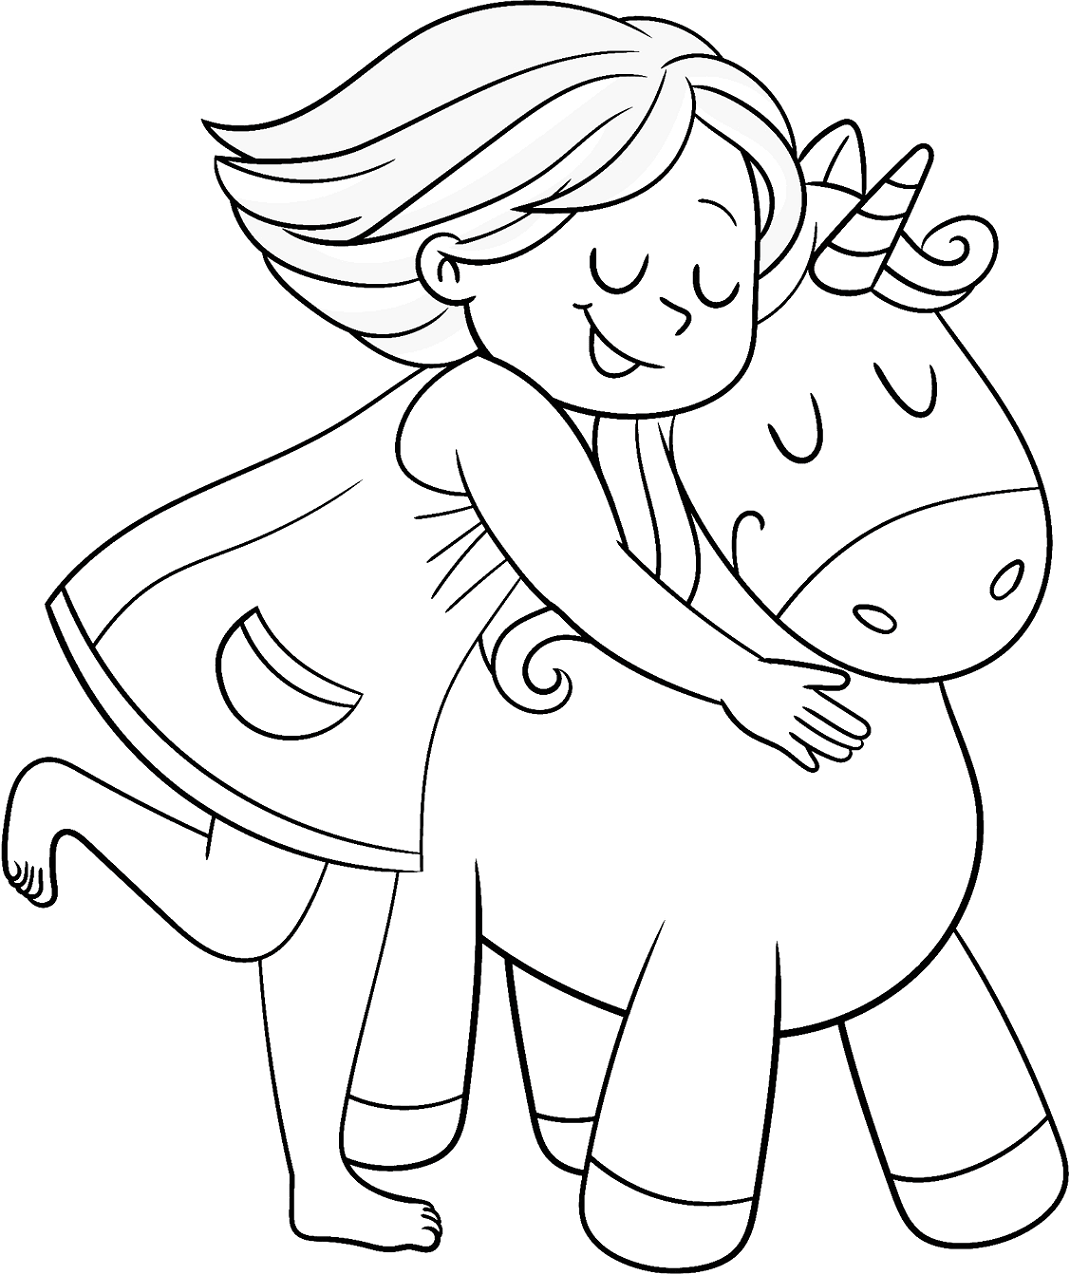 Dibujos de Chica con Unicornio para colorear